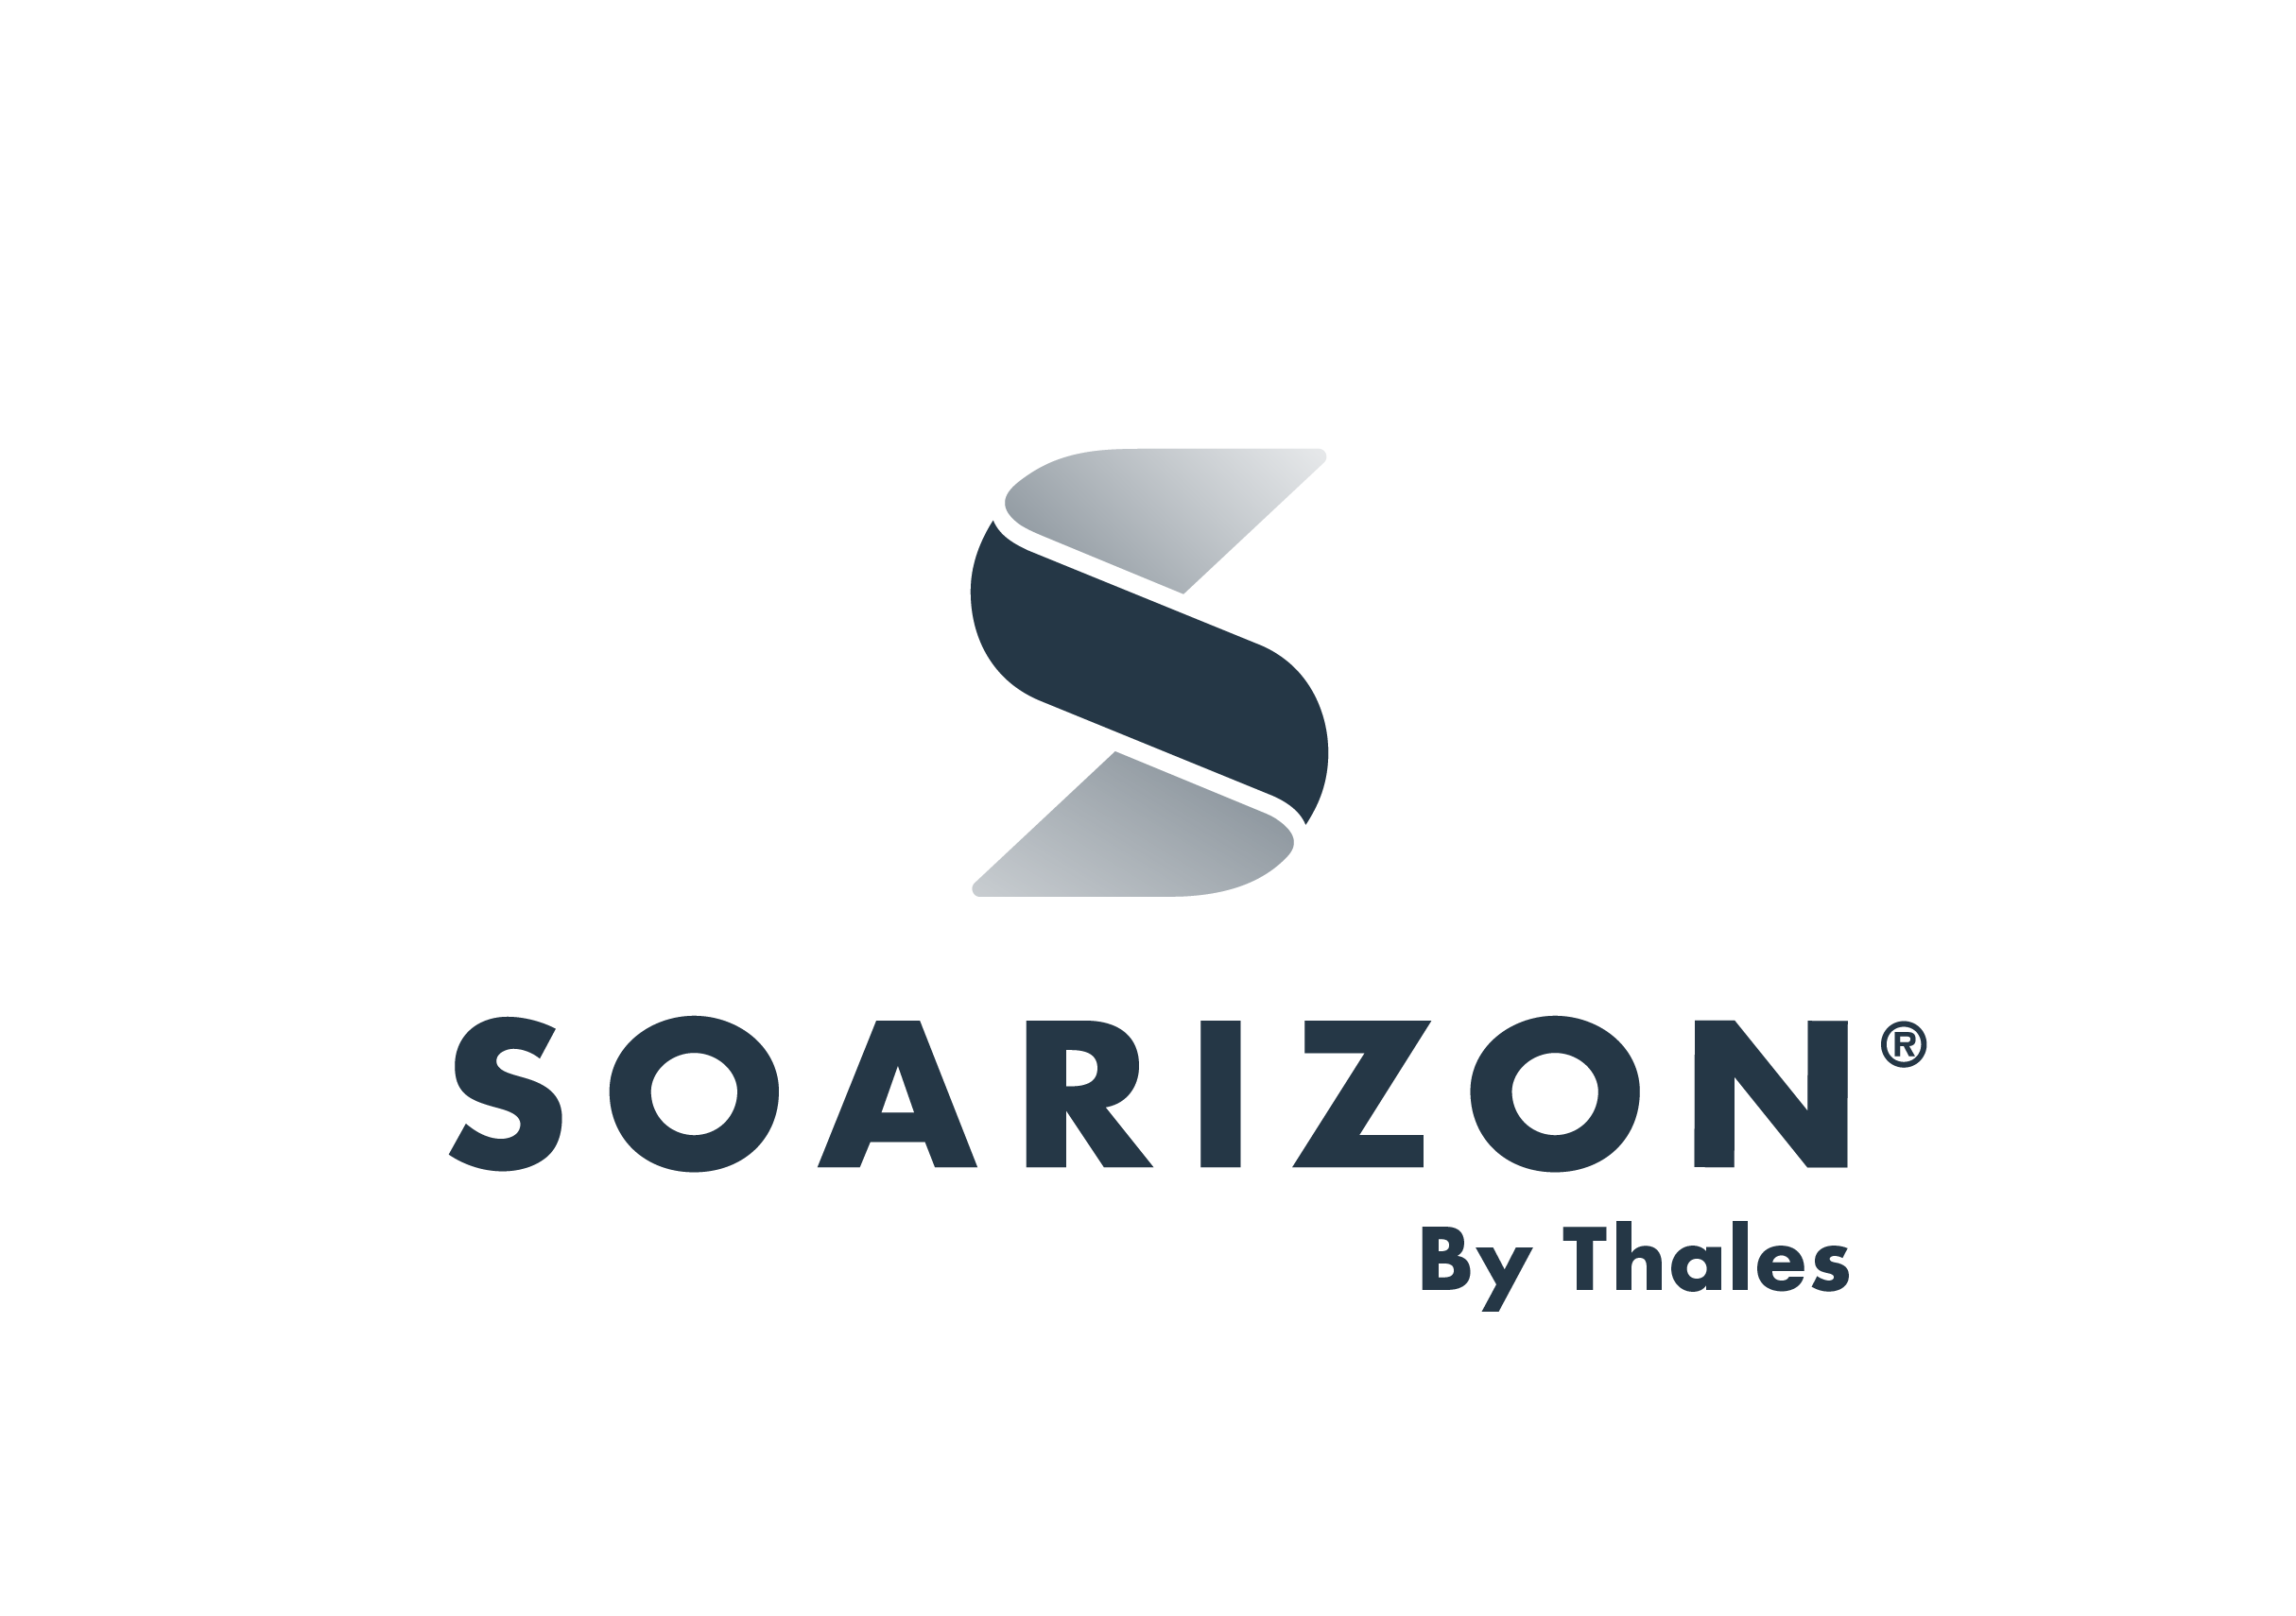 Soraizon logo